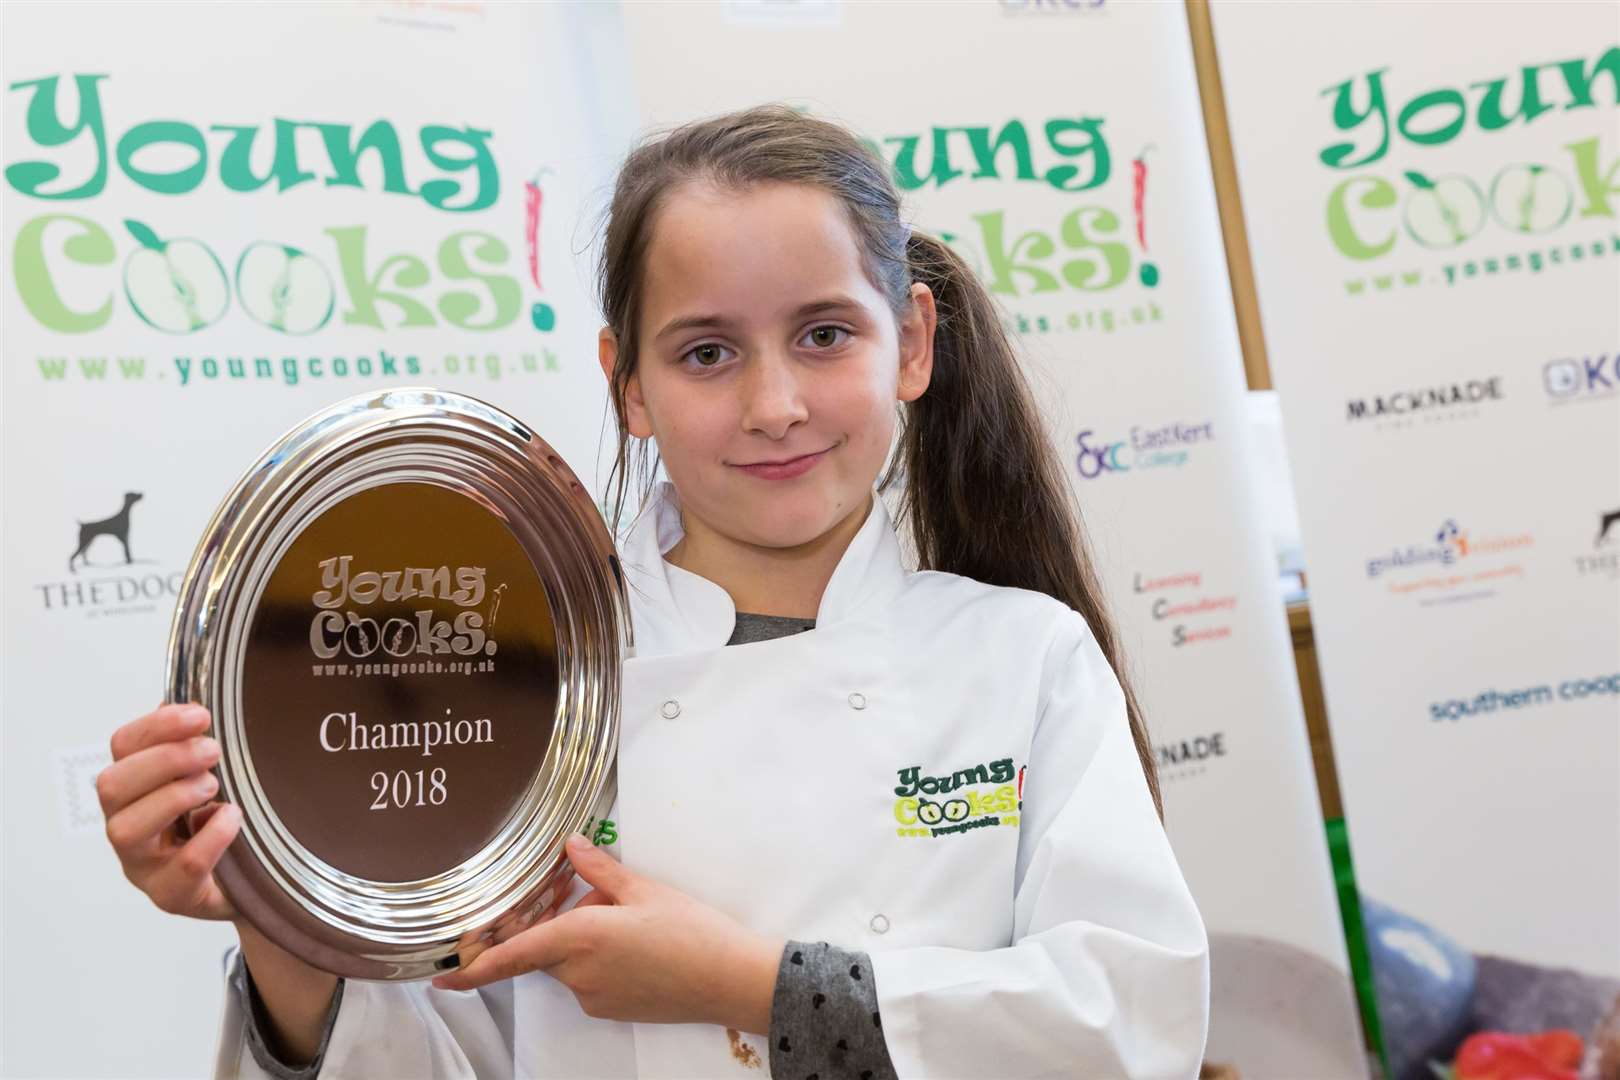 2018 overall Young Cooks champion Boglar Bote Godri of St Nicholas Primary School in New Romney